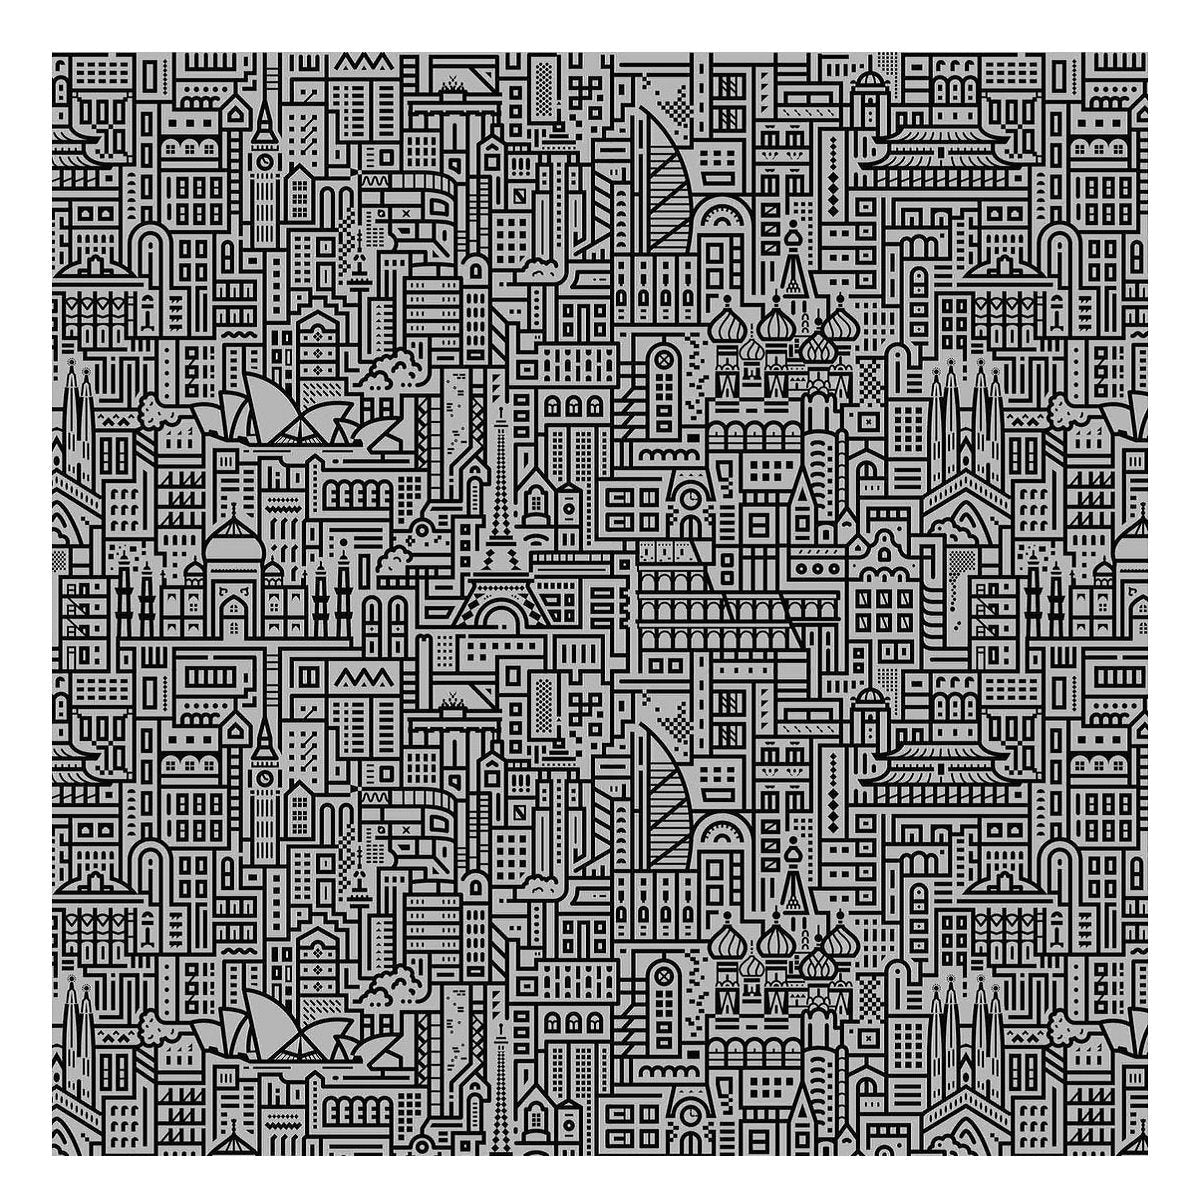 Notabag_Hello_world_black_grey_city_artwork_fabric_pattern.jpg